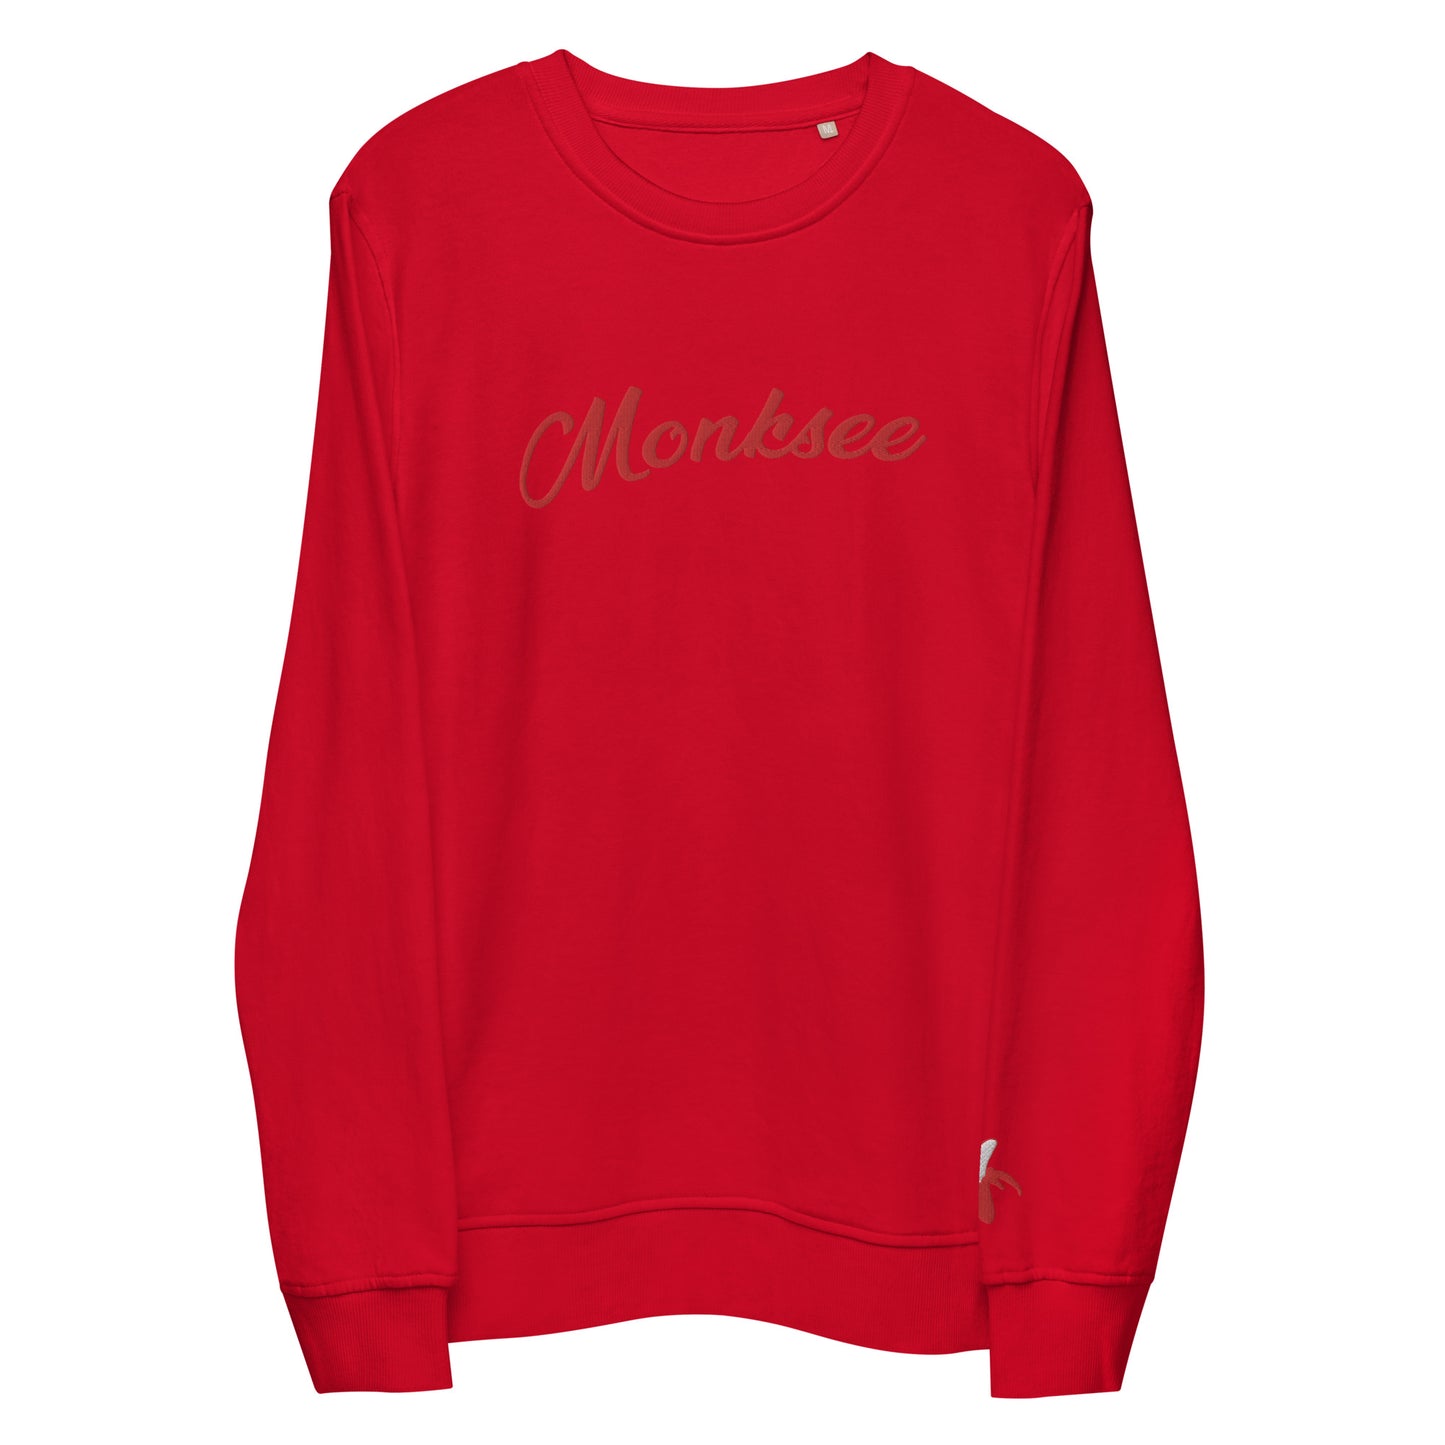 I.C Red - Organic Monksee sweatshirt